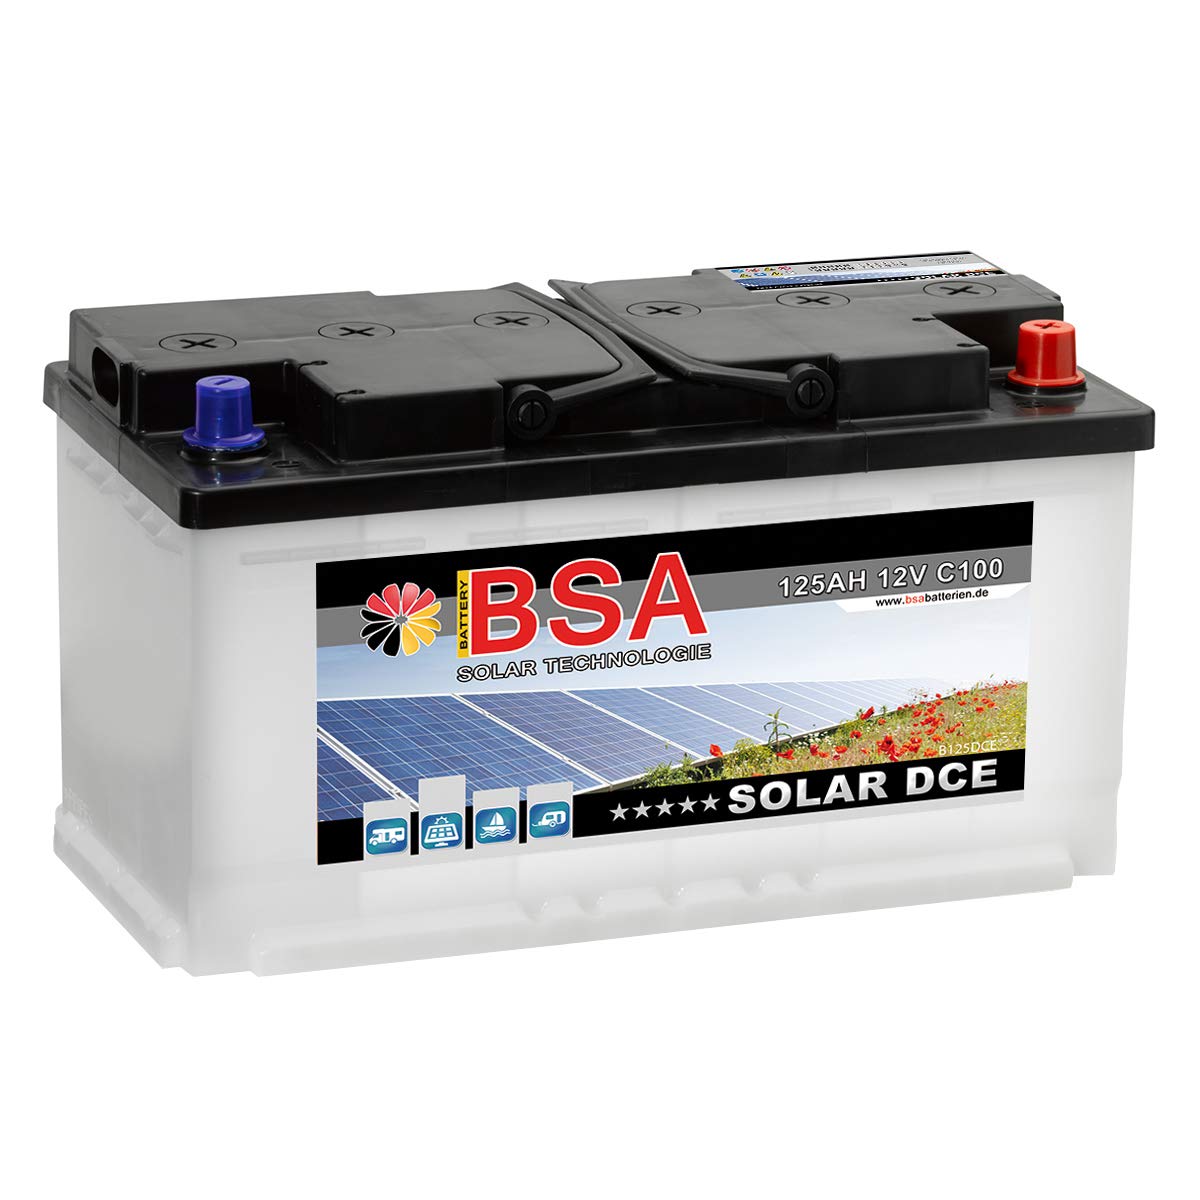 BSA Solar DCE 12V 125Ah Batterie Solarbatterie Versorgungsbatterie Boot Wohnmobil (125Ah) von BSA SOLAR DC